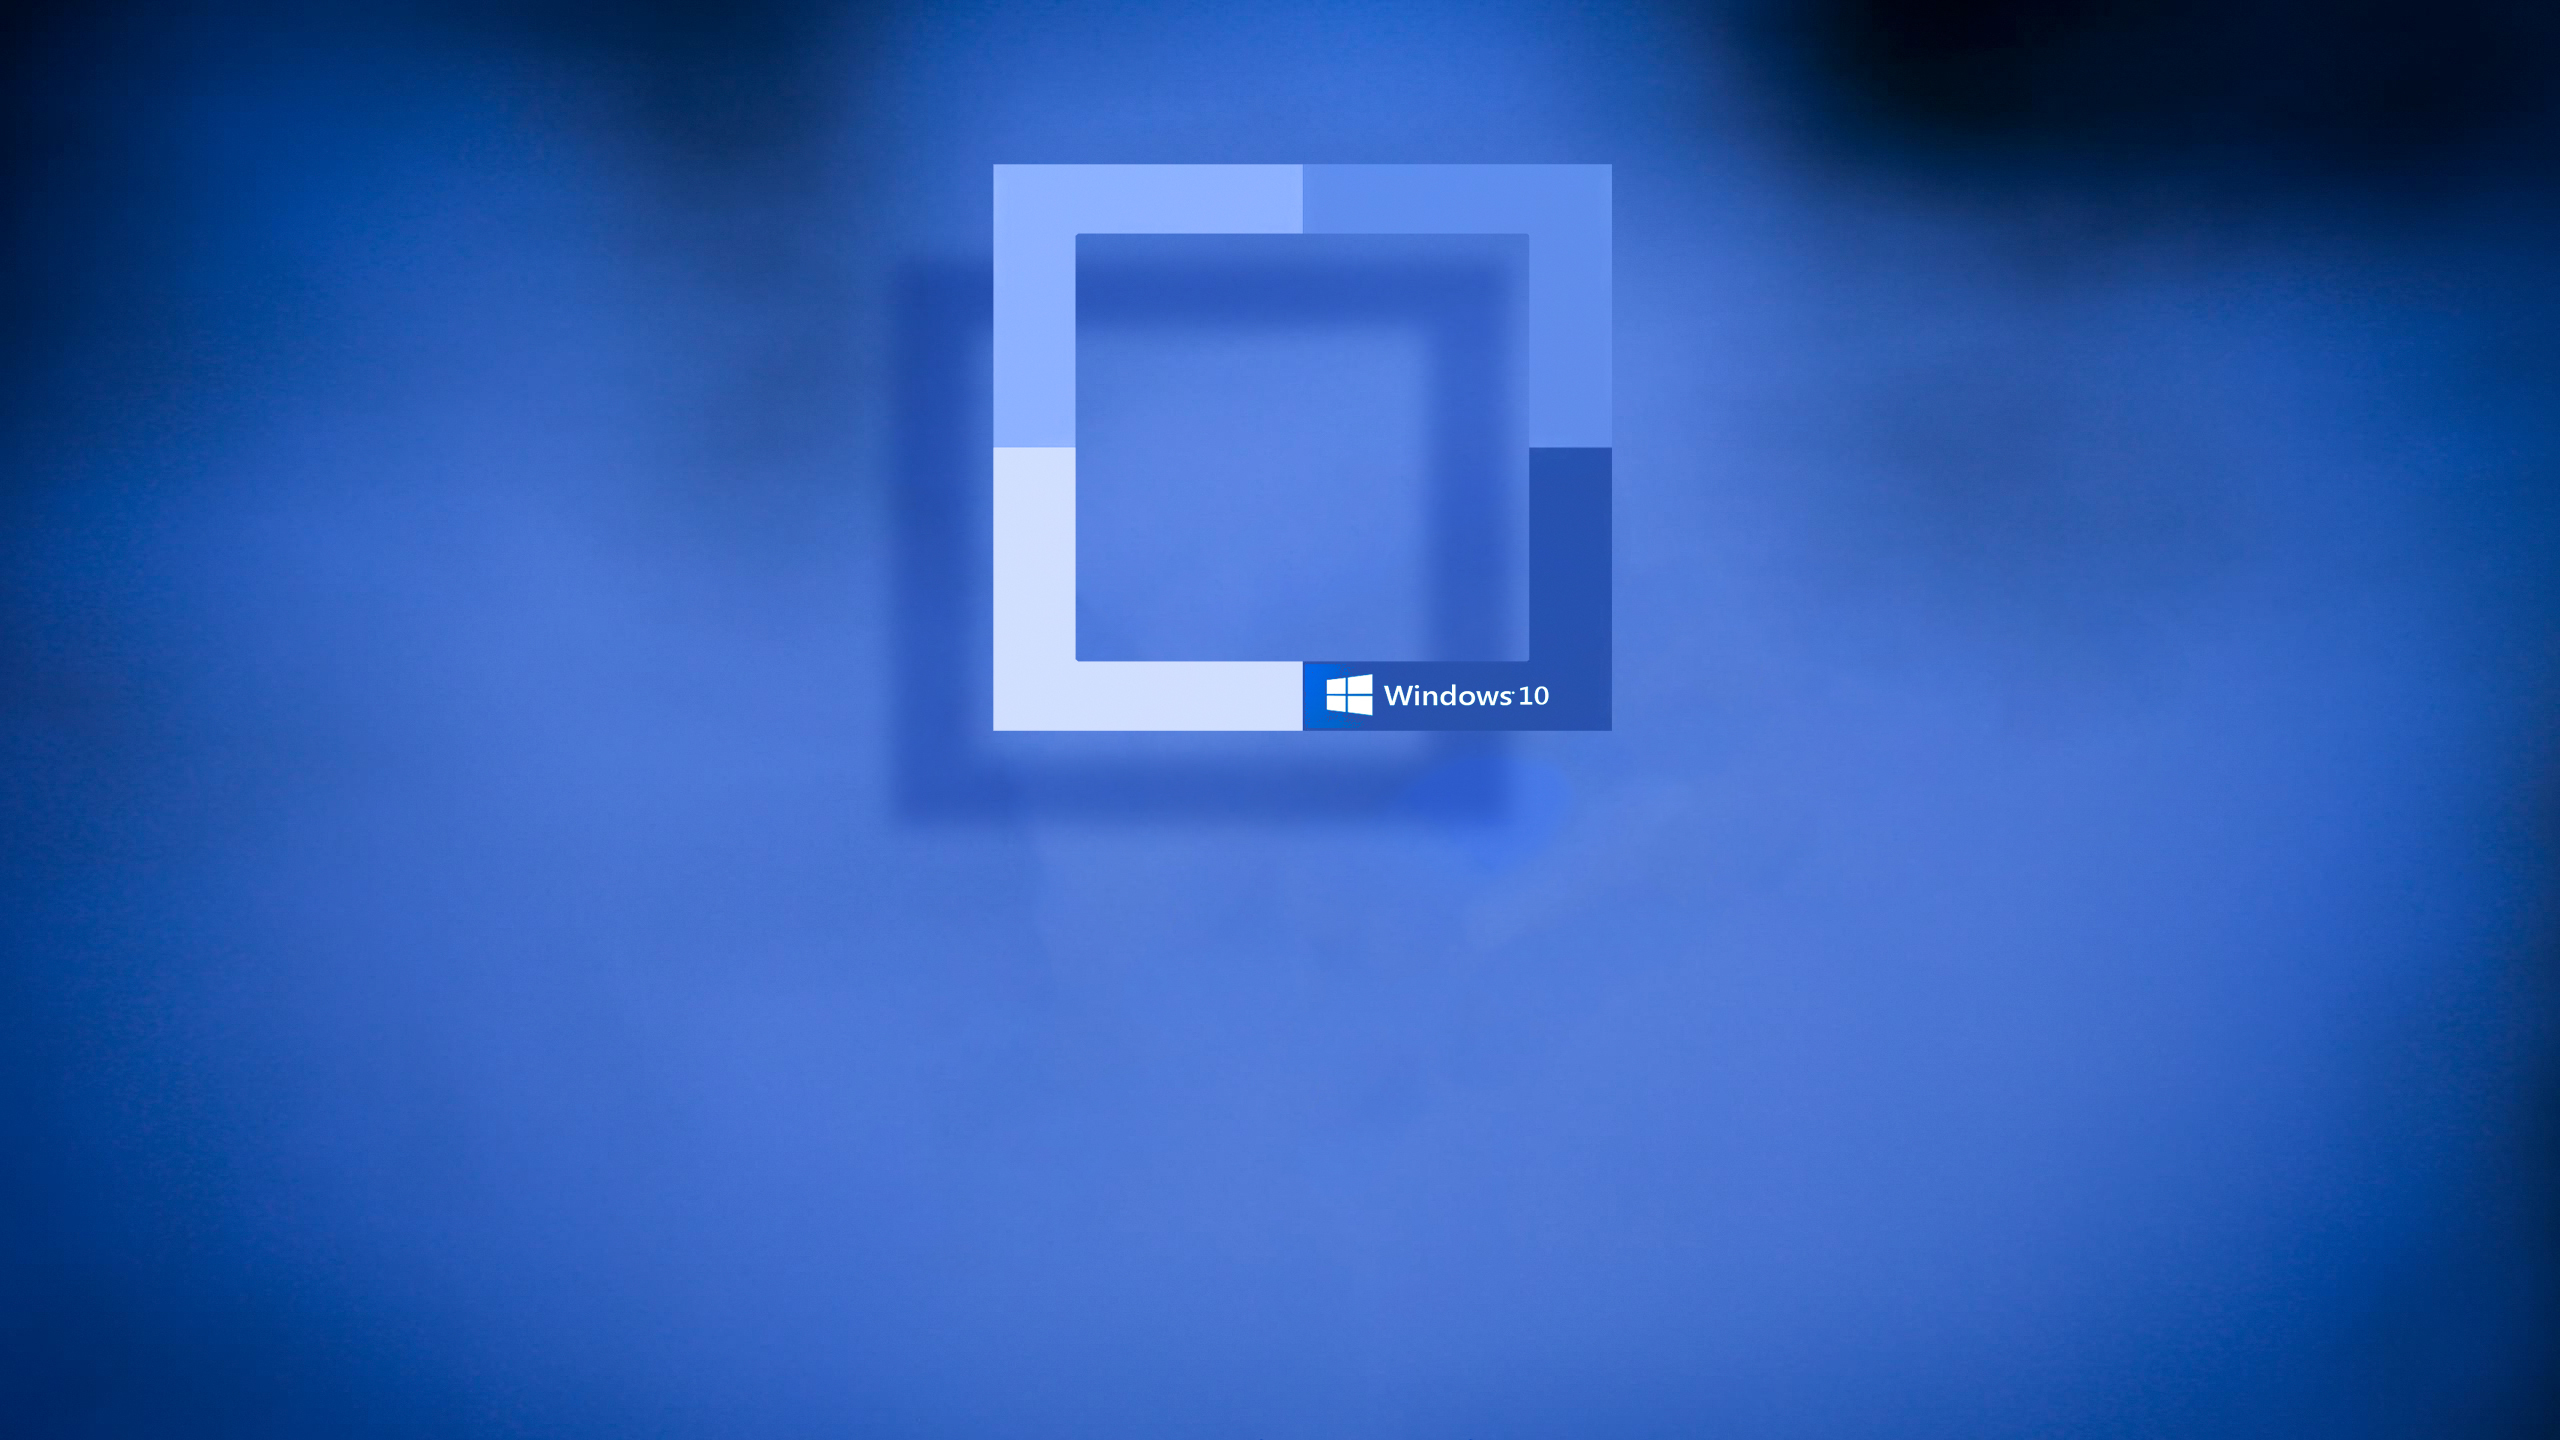 Windows 10 Wallpapers Desktop Backgrounds   5 windows10 wallpaper 2560x1440